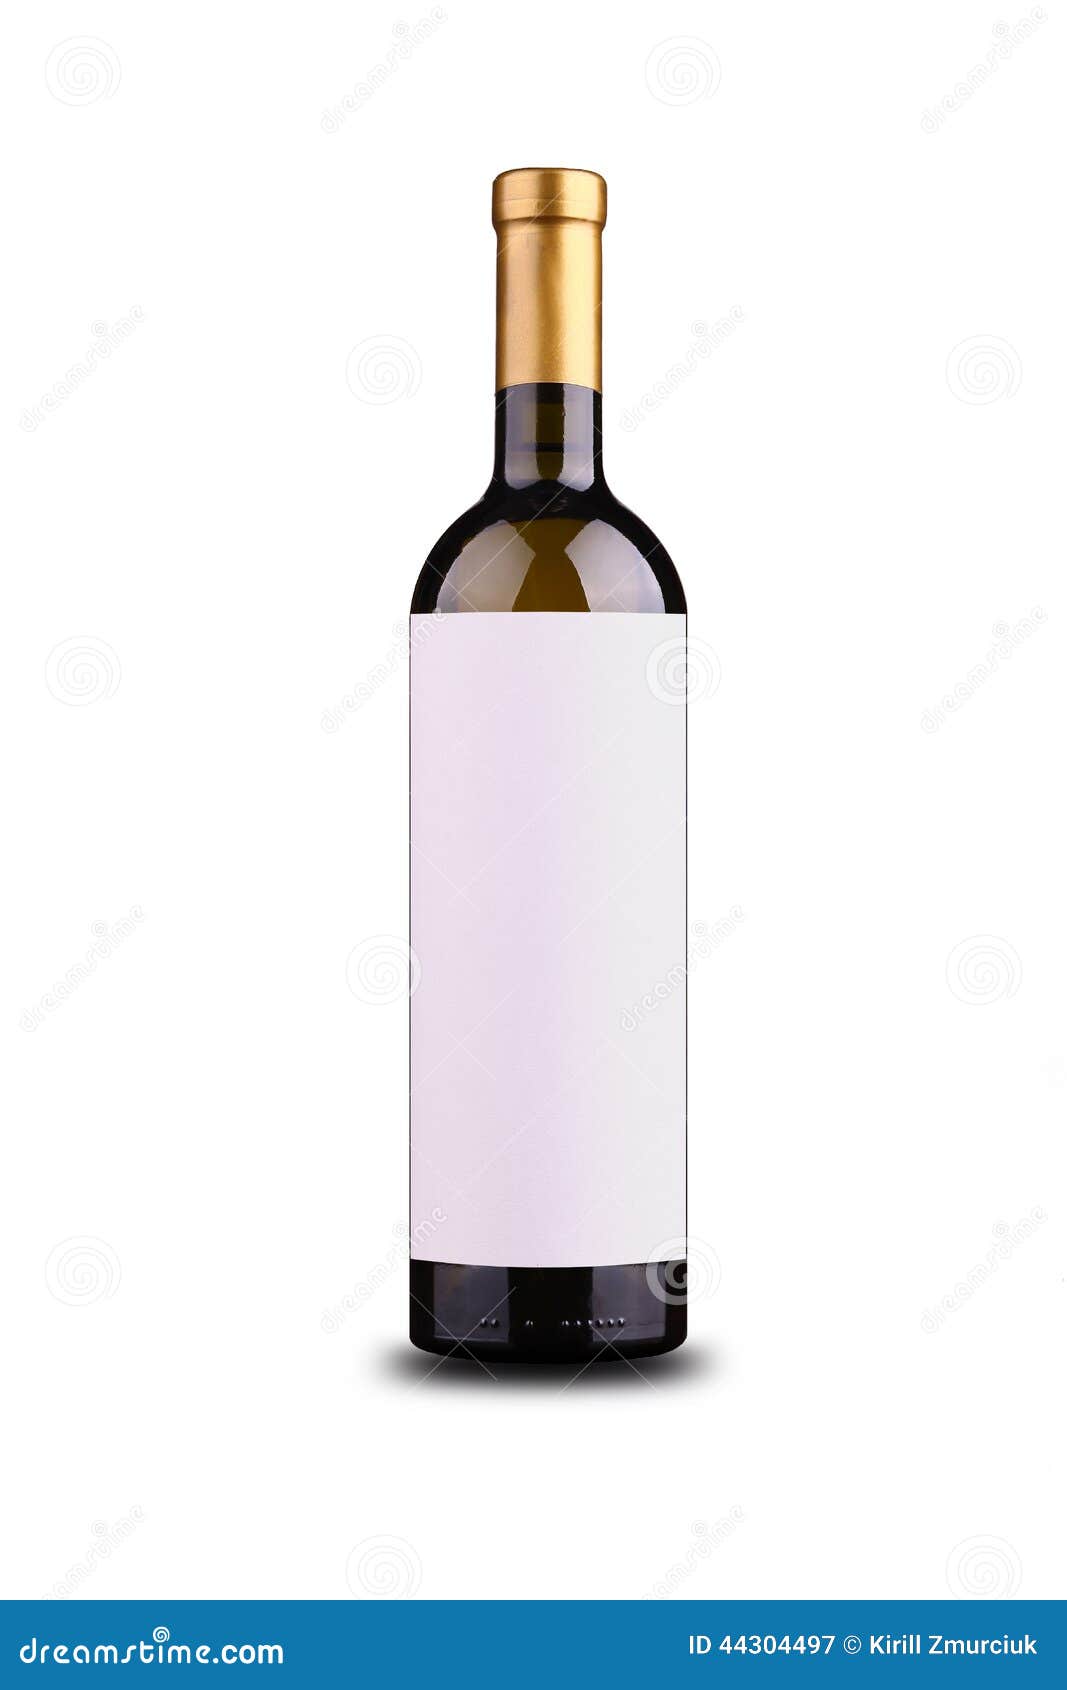 Blank wine label